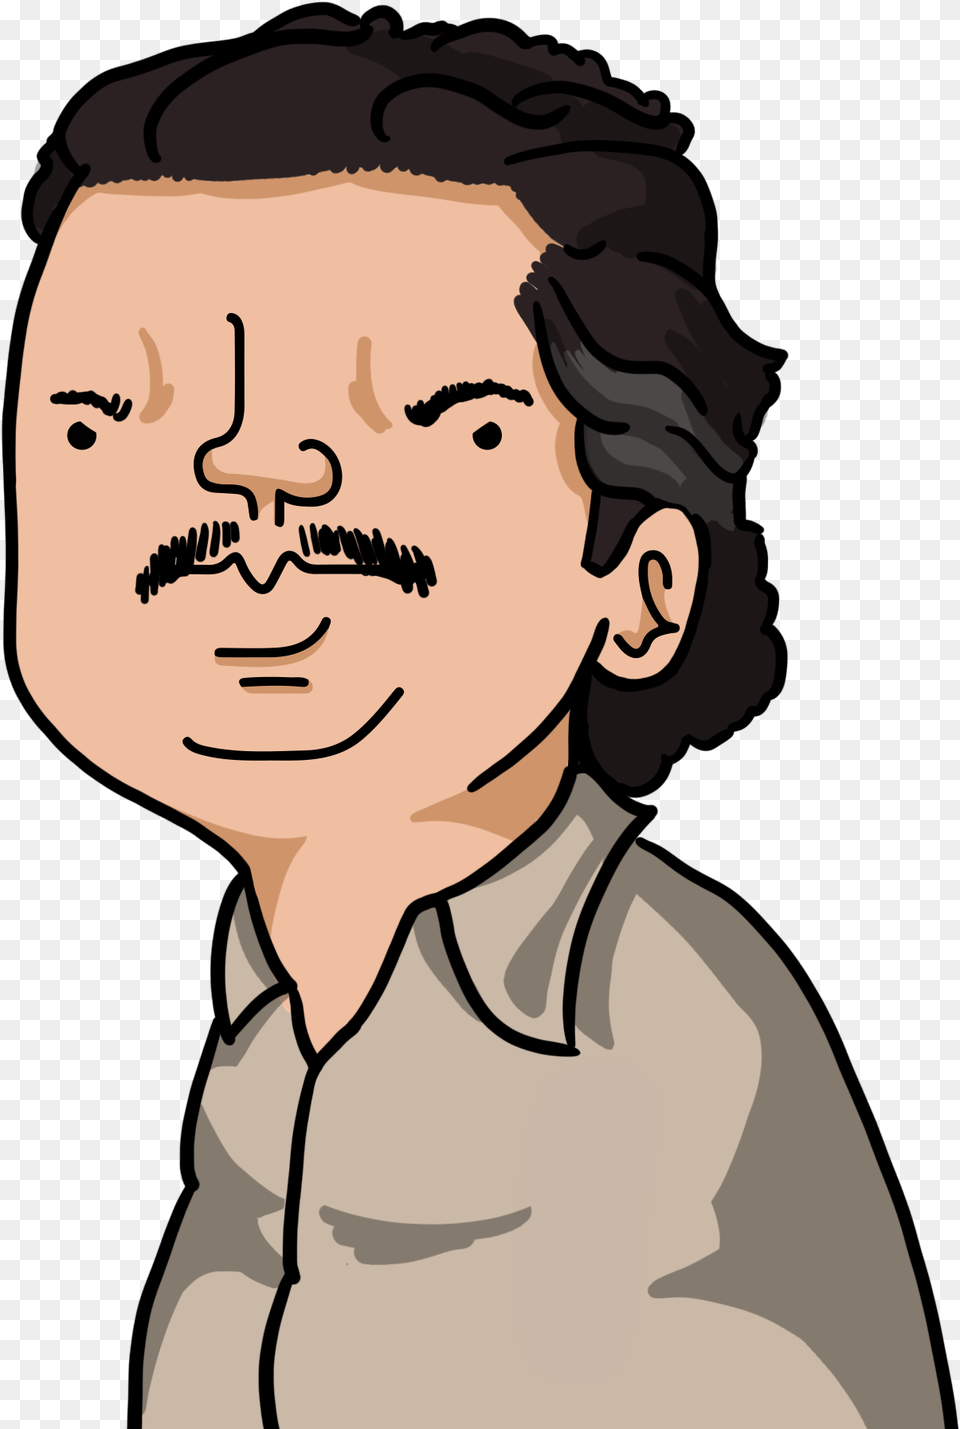 Terracid As Pablo Escobar Cartoon, Portrait, Photography, Face, Head Free Png Download